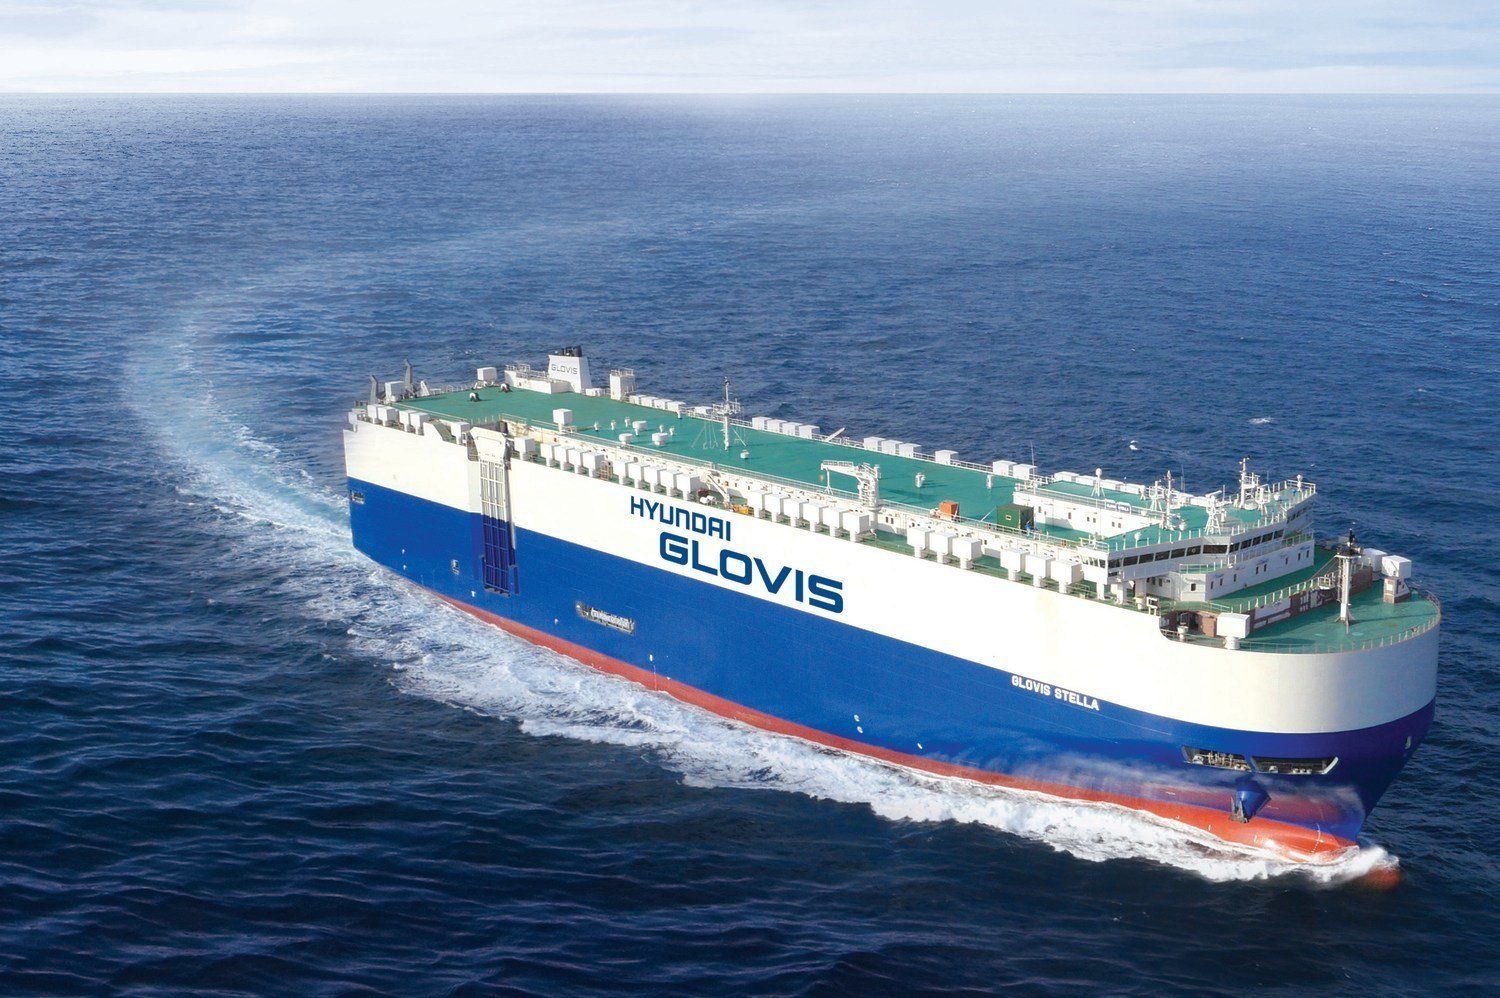 First EV specialized marine transportation solution: Hyundai Glovis sets world record